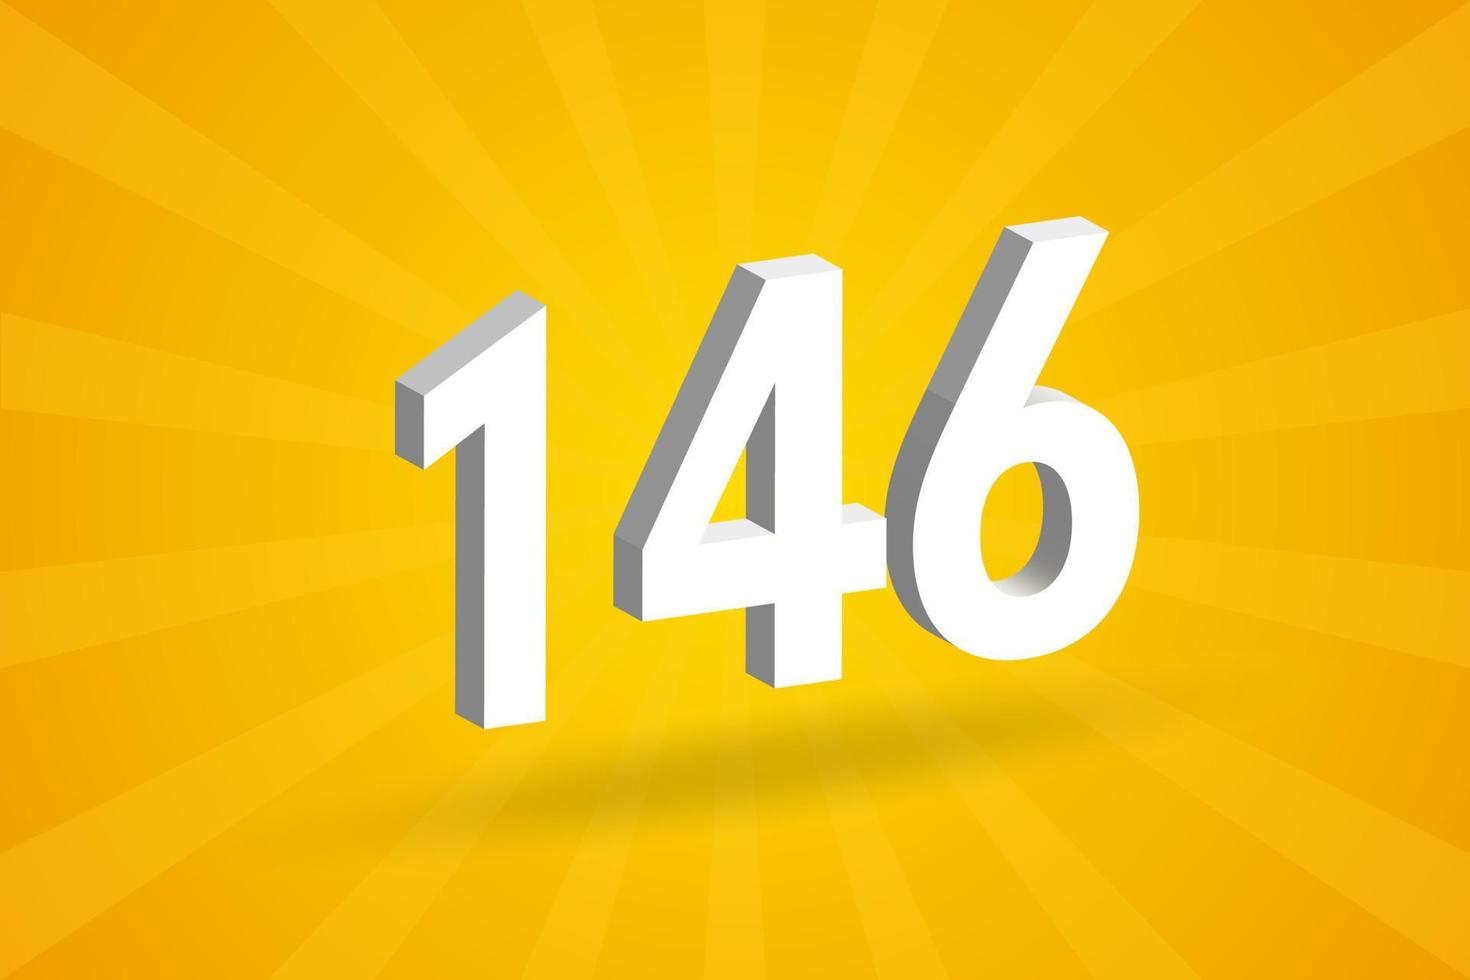 3d 146 siffra font alfabet. vit 3d siffra 146 med gul bakgrund vektor